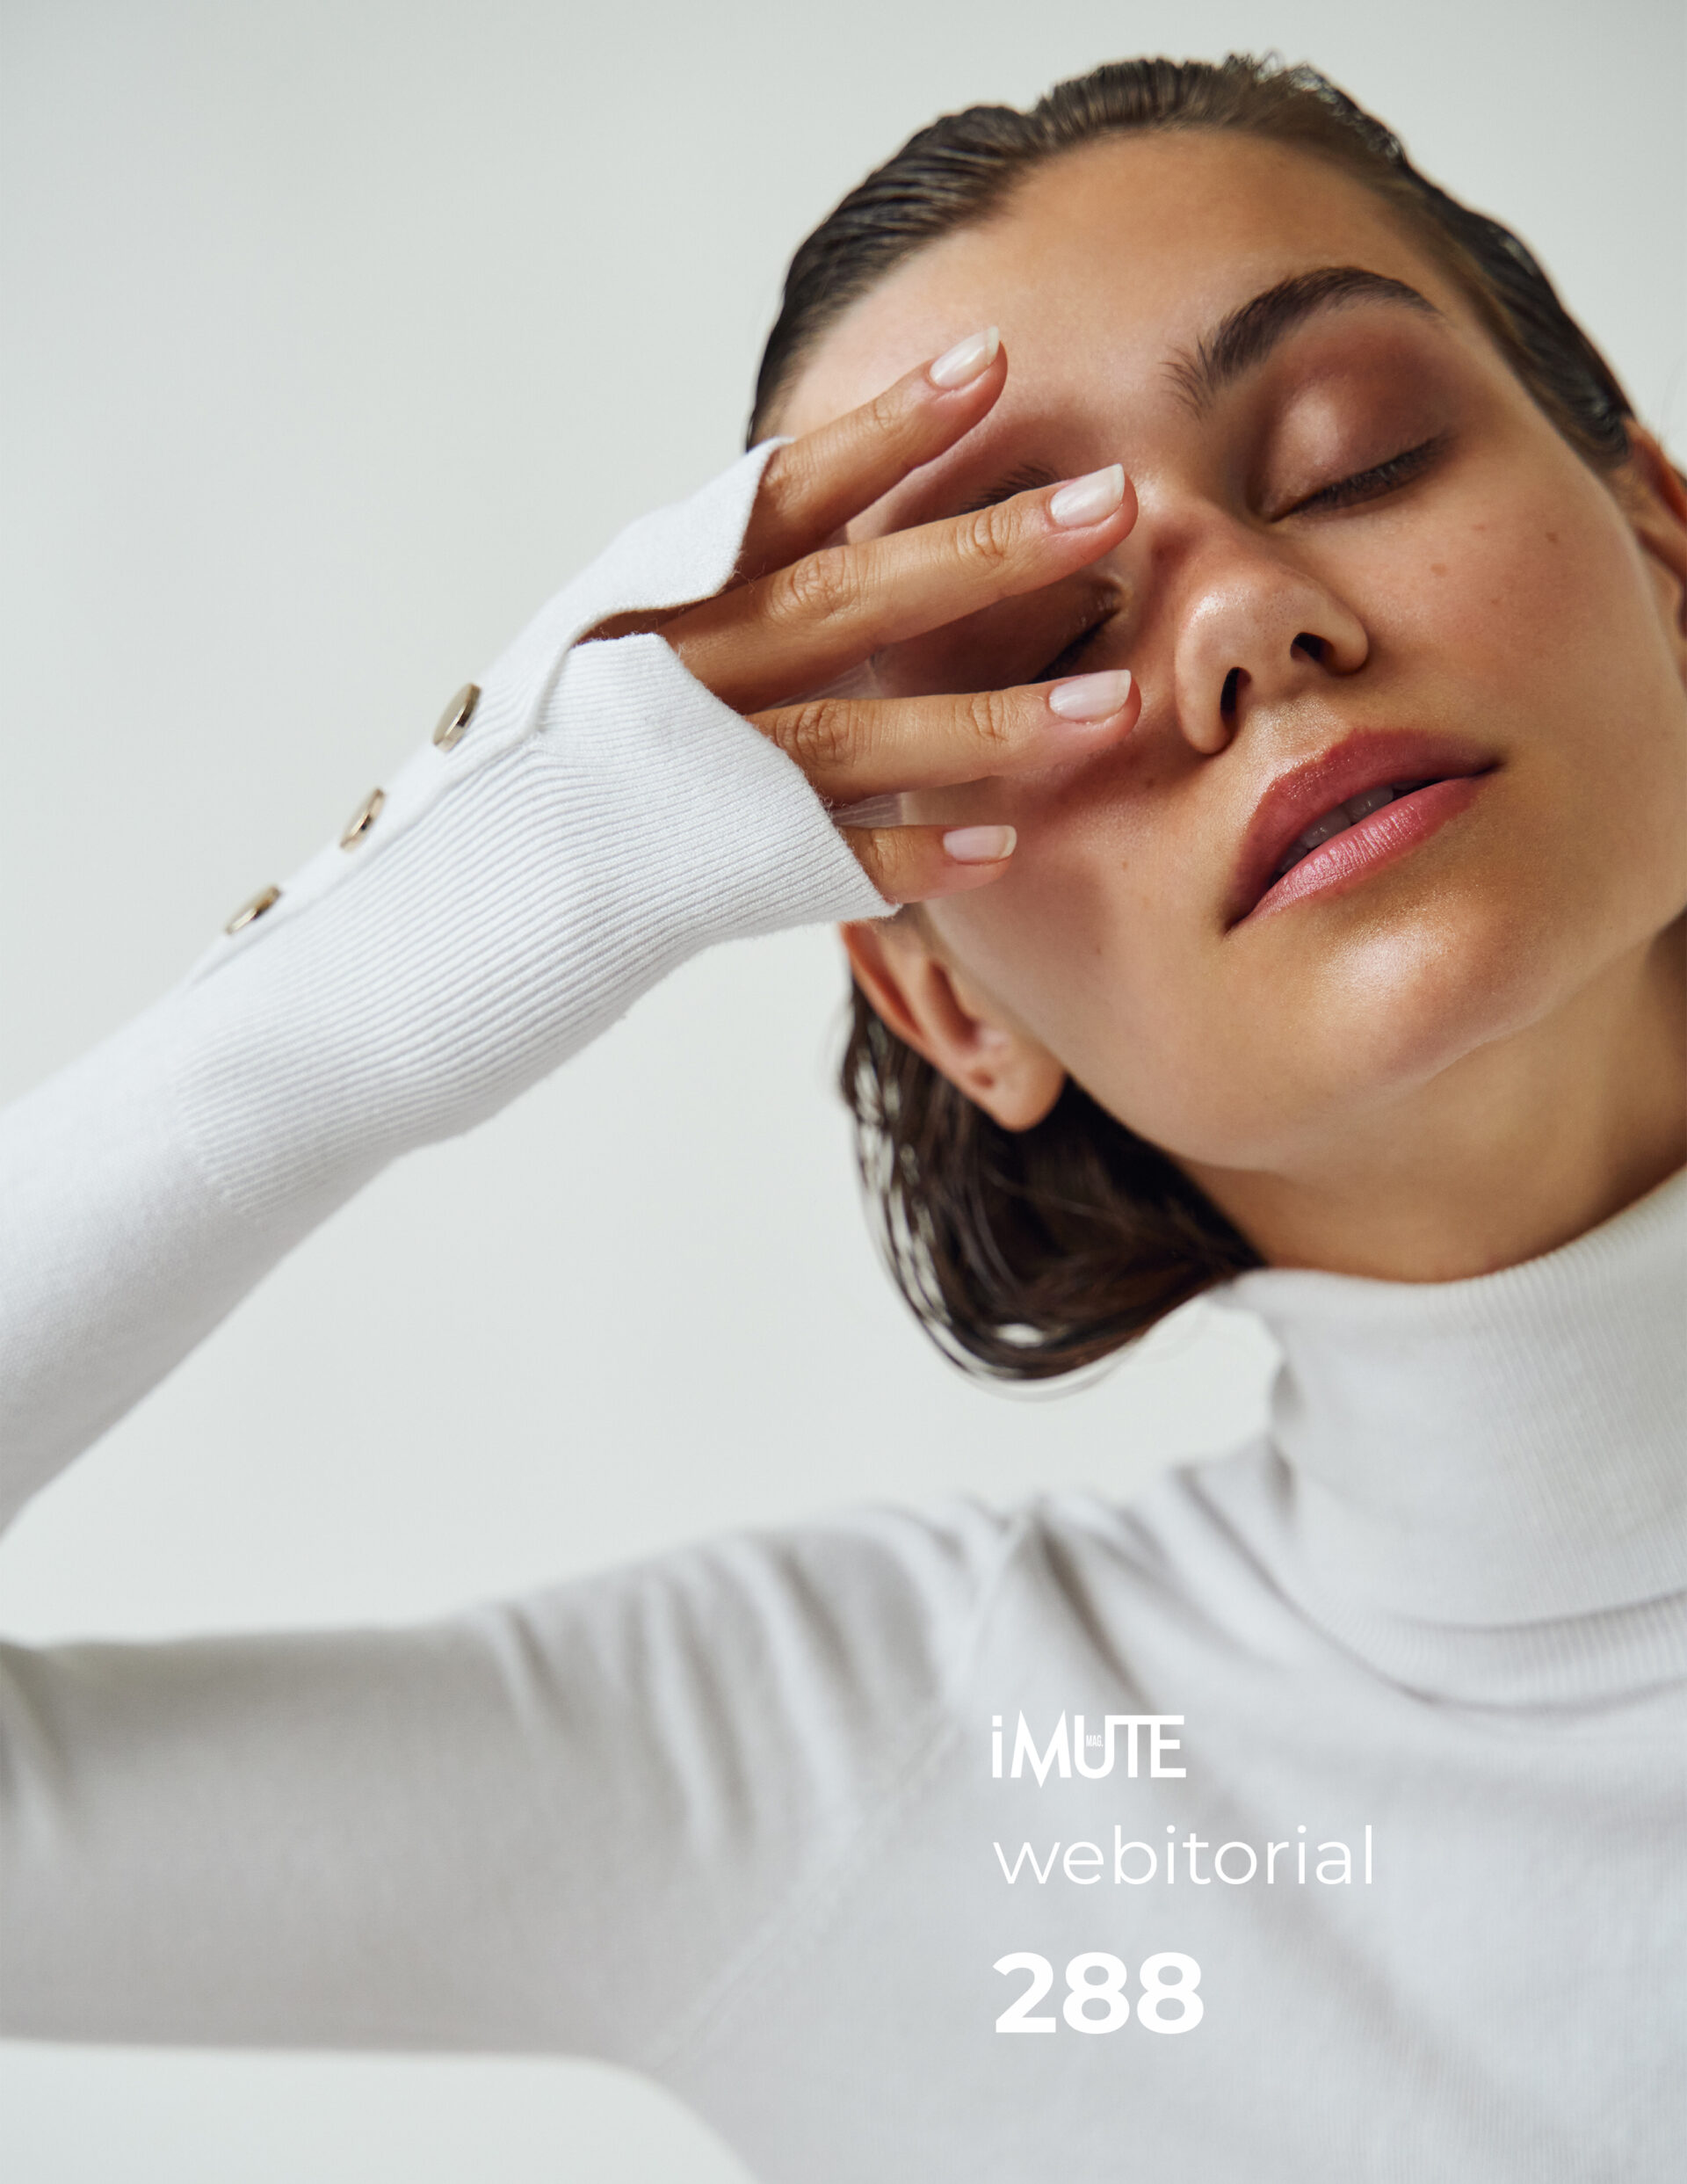 Minimalistic webitorial for iMute Magazine PHOTOGRAPHER | TOMJUSKEVICIUS MODEL | GABRIELE SODONYTE @ RUTA MODEL MANAGMENT MAKEUP | RUSNE GABRIELE DONAITYTE